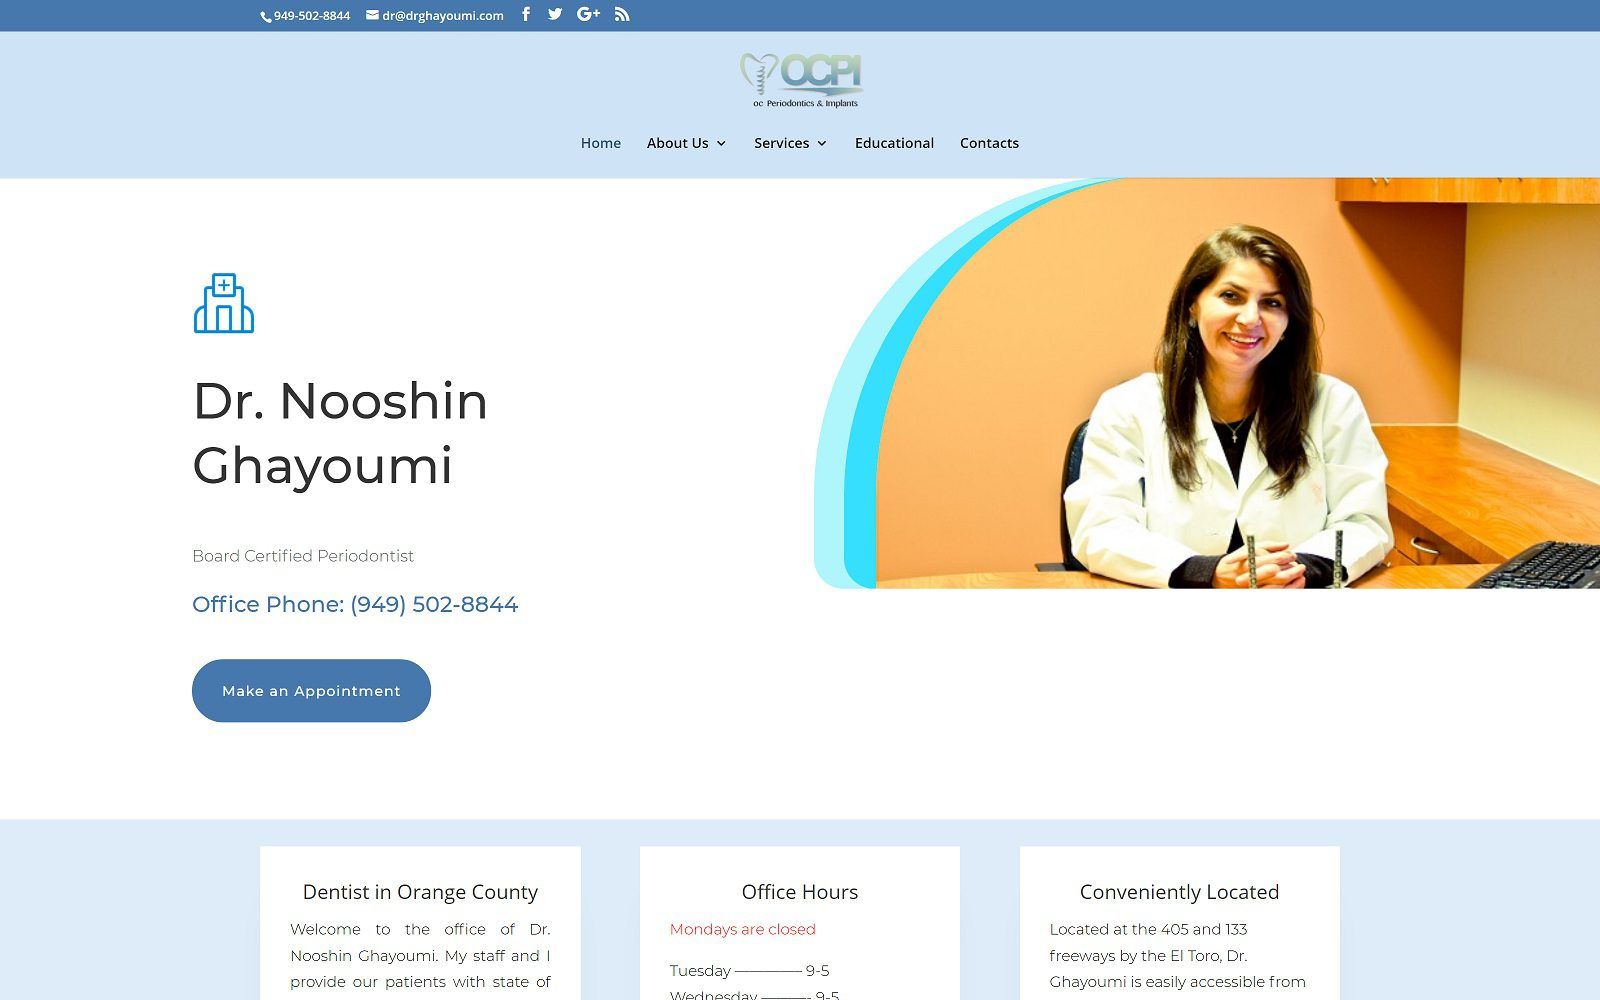 The screenshot of dr. Nooshin ghayoumi, dds website